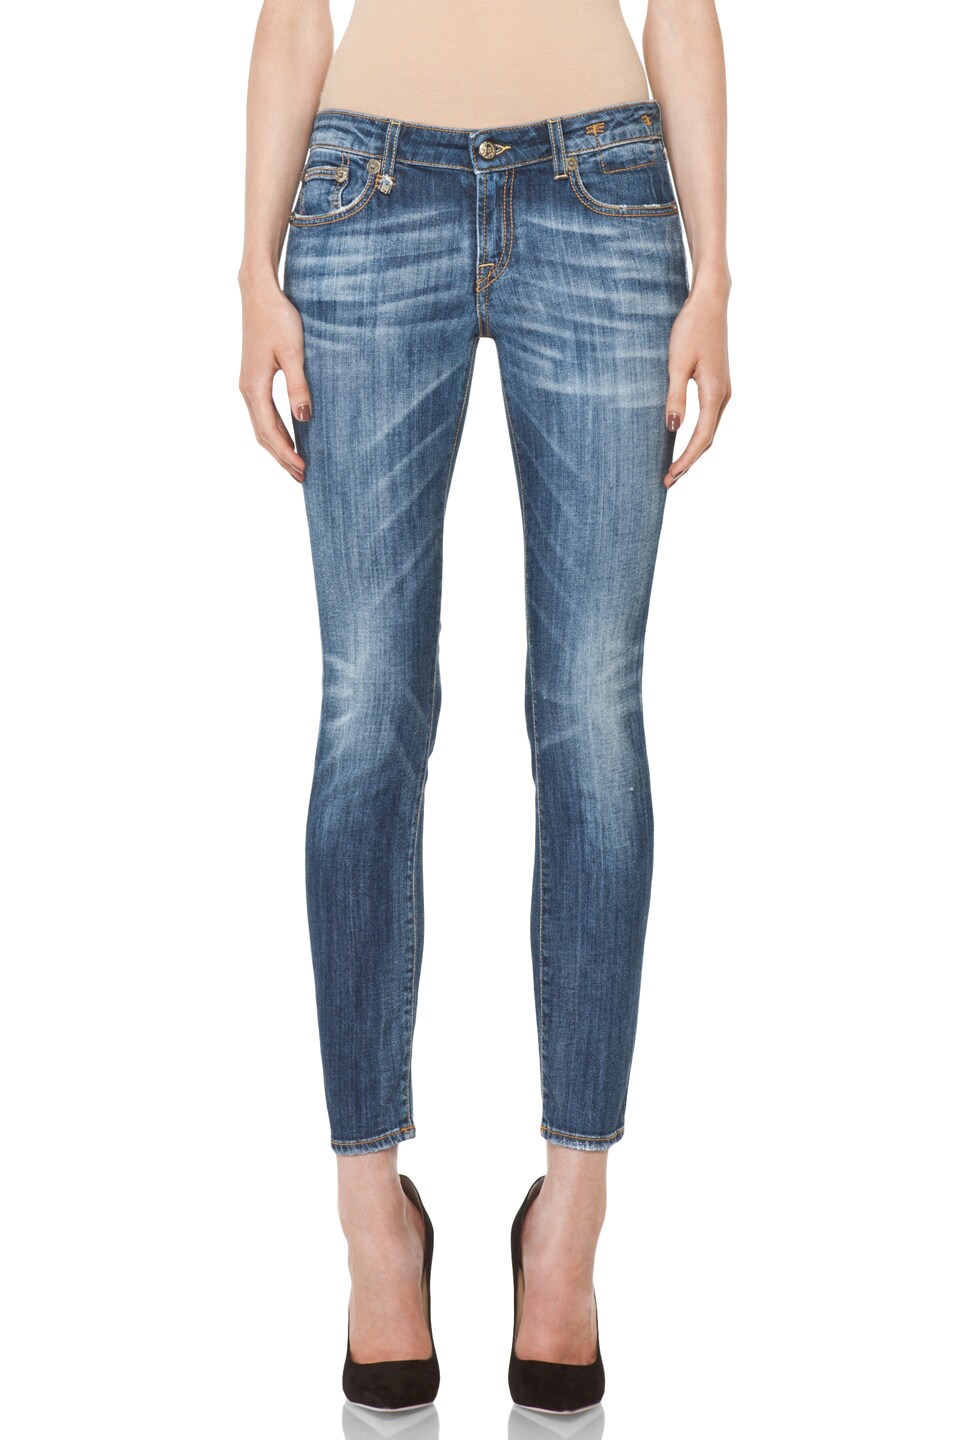 R13 Low Skinny Cropped Jean in Faded Blue | FWRD